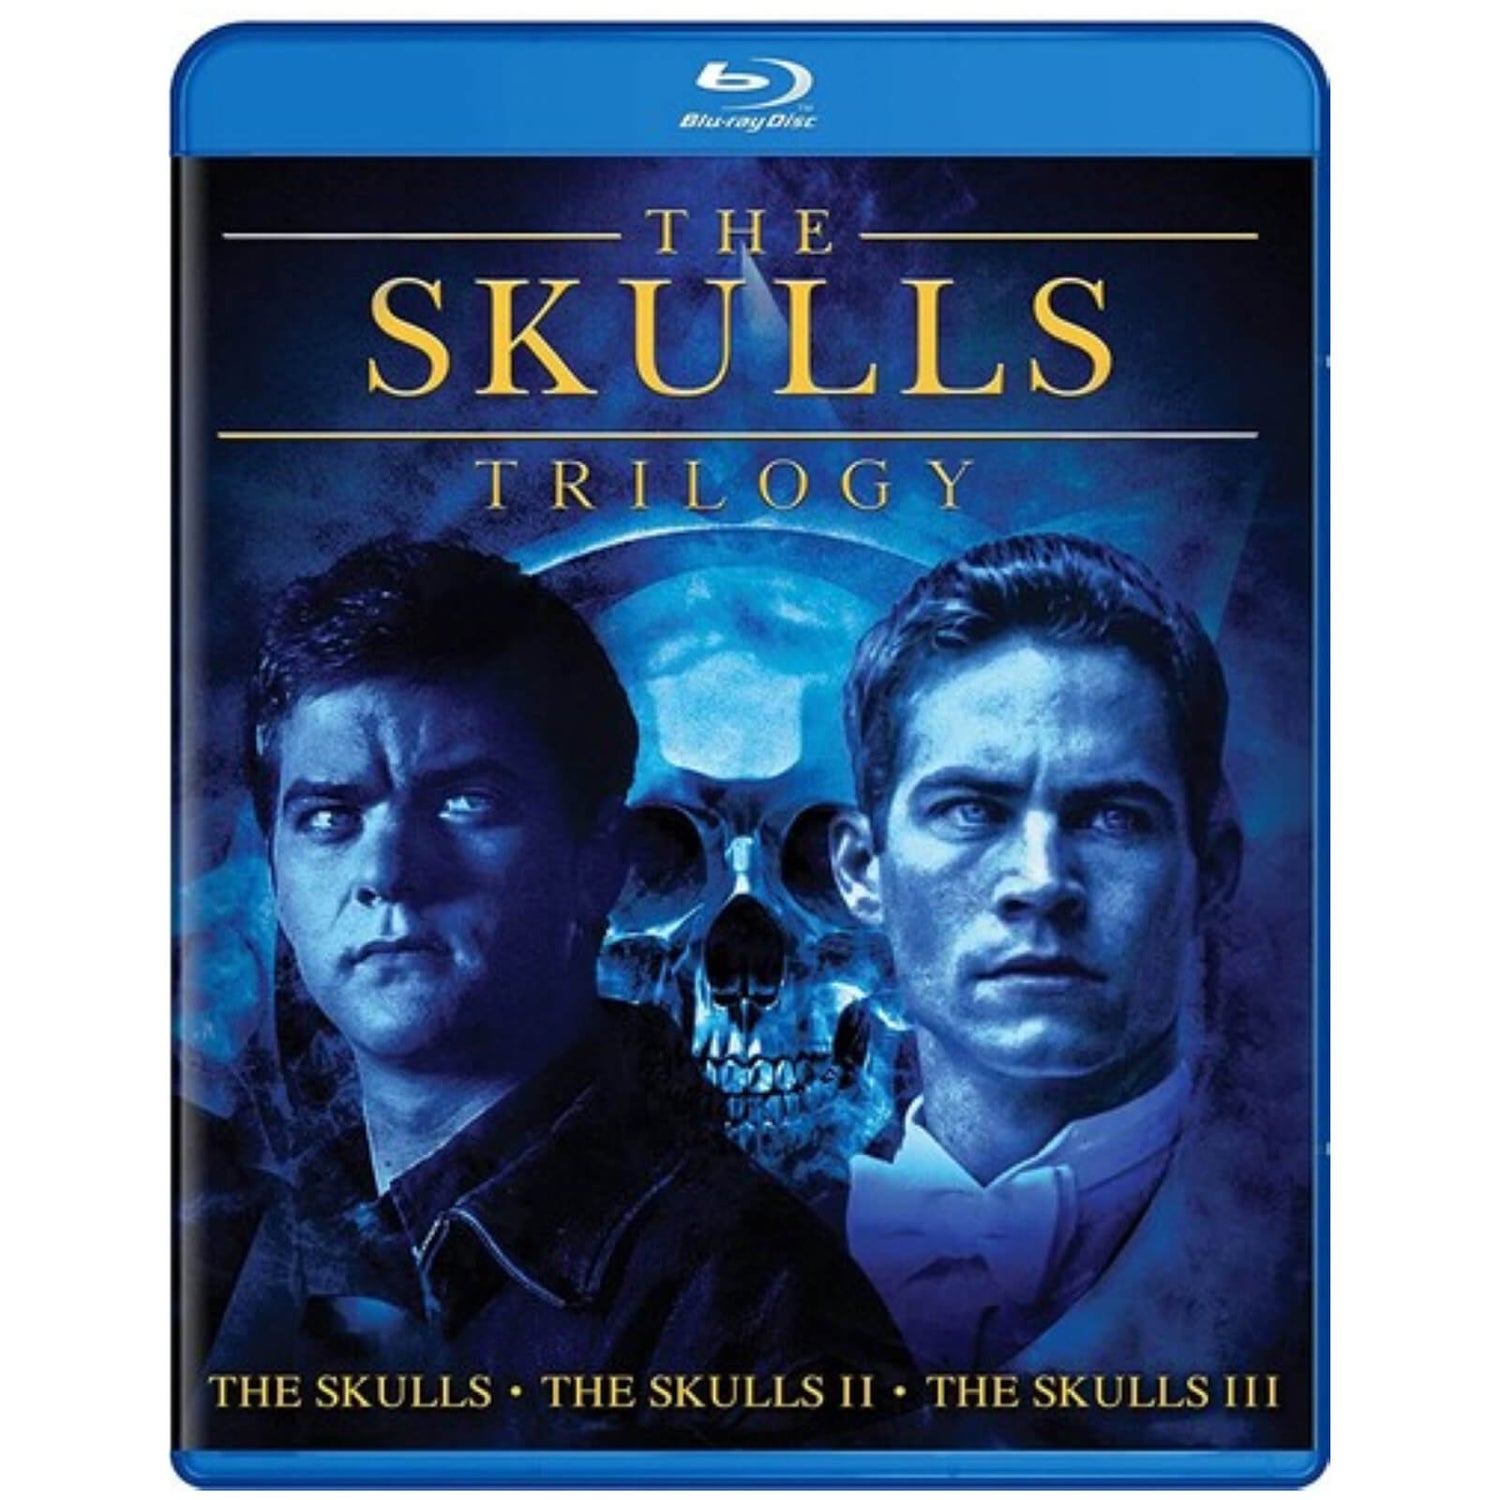 The Skulls Trilogy: The Skulls / The Skulls II / The Skulls III (US Import)